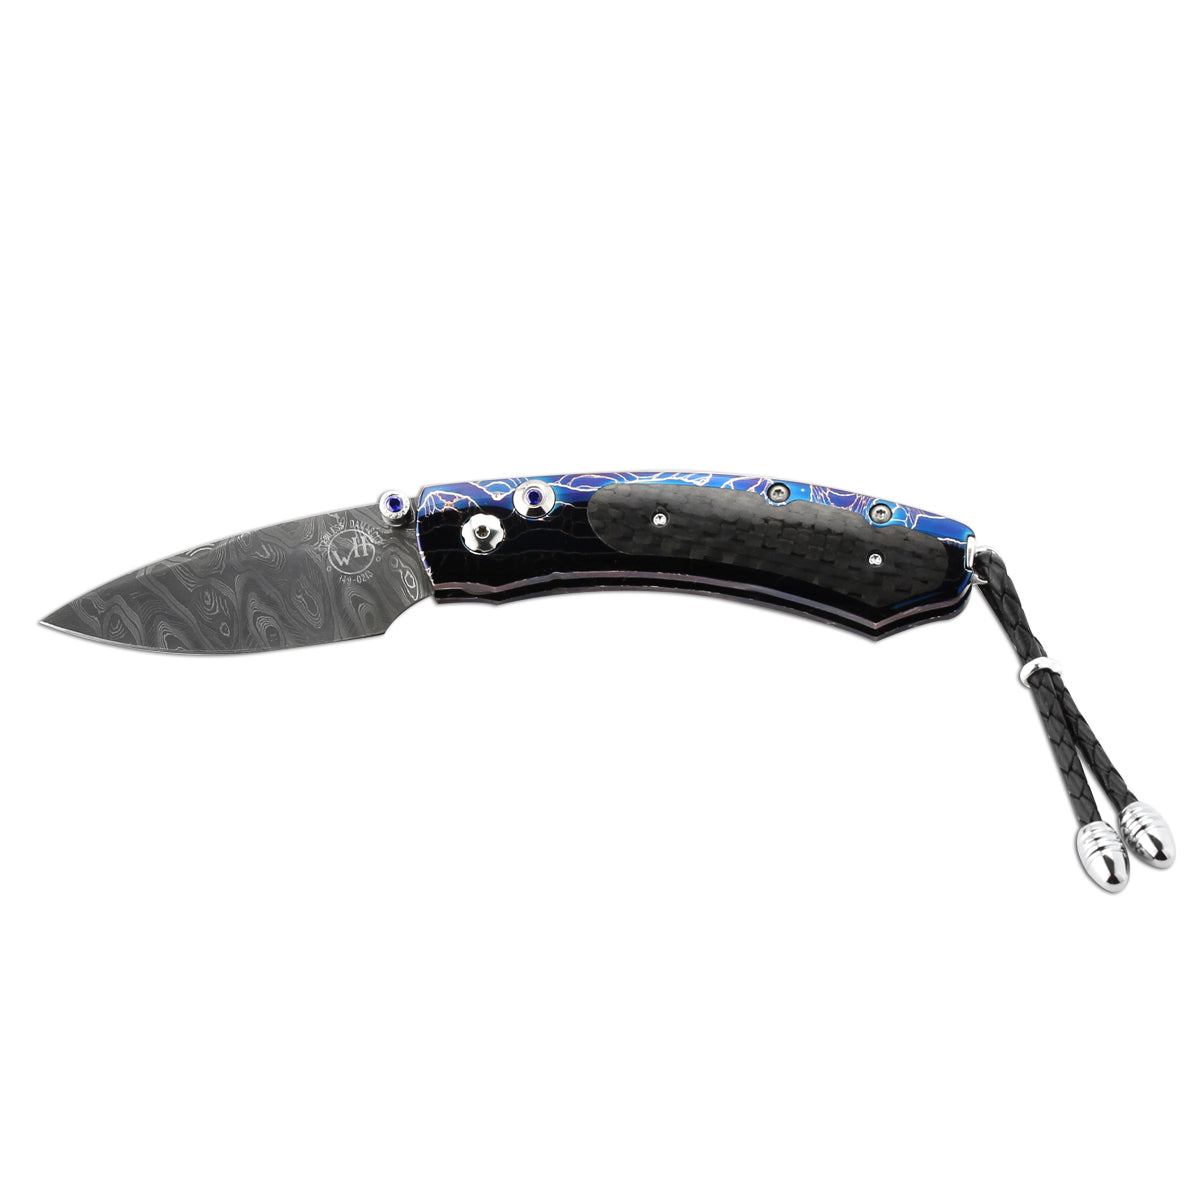 Kestrel 'Blueray' Knife 347819